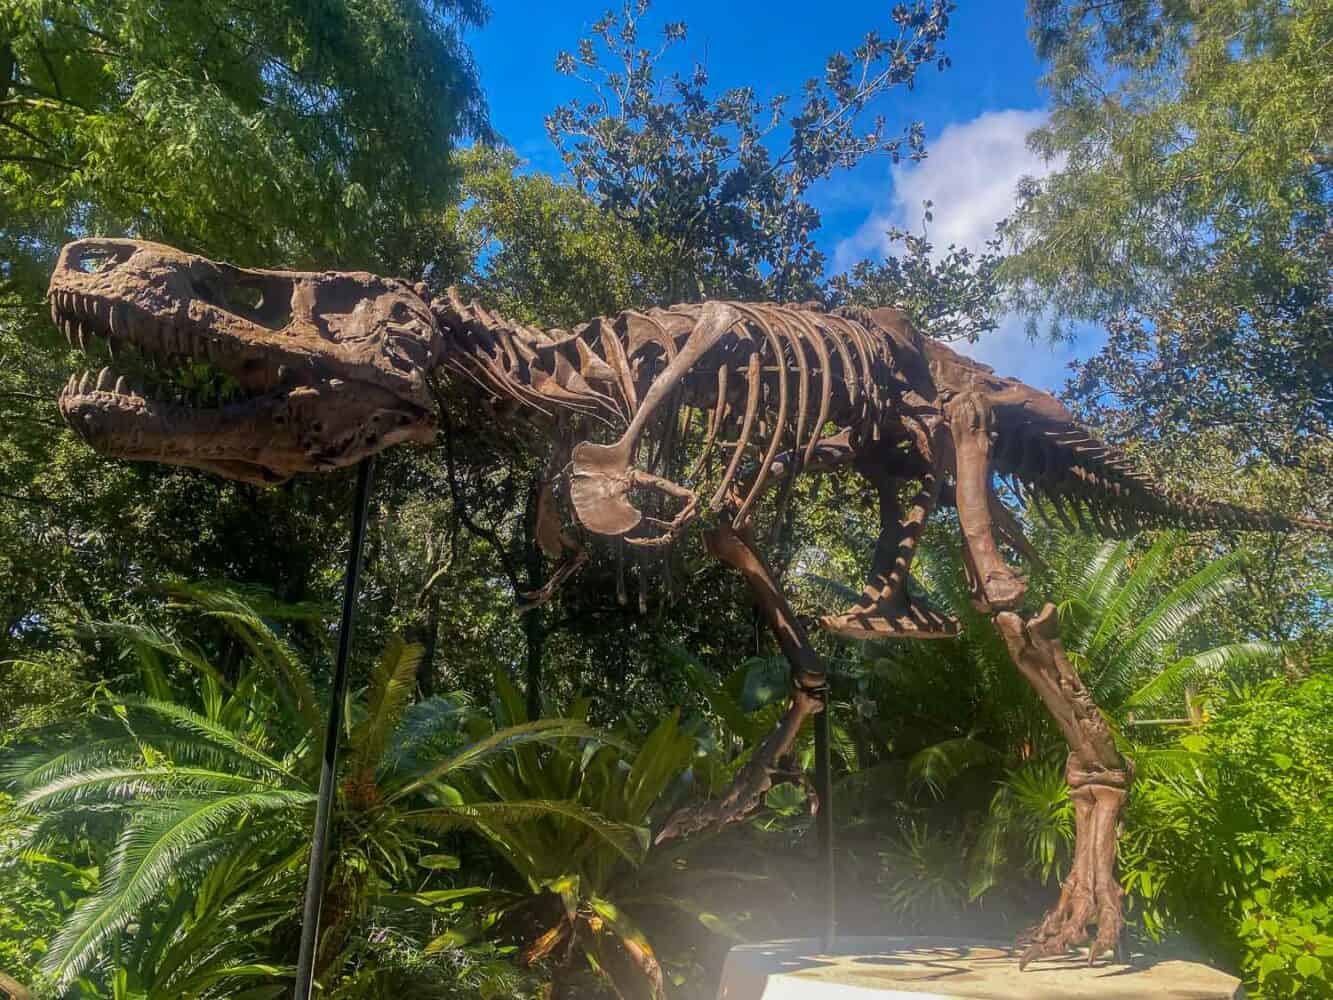 Towering Dinosaur skeleton, Animal Kingdom, Disney World